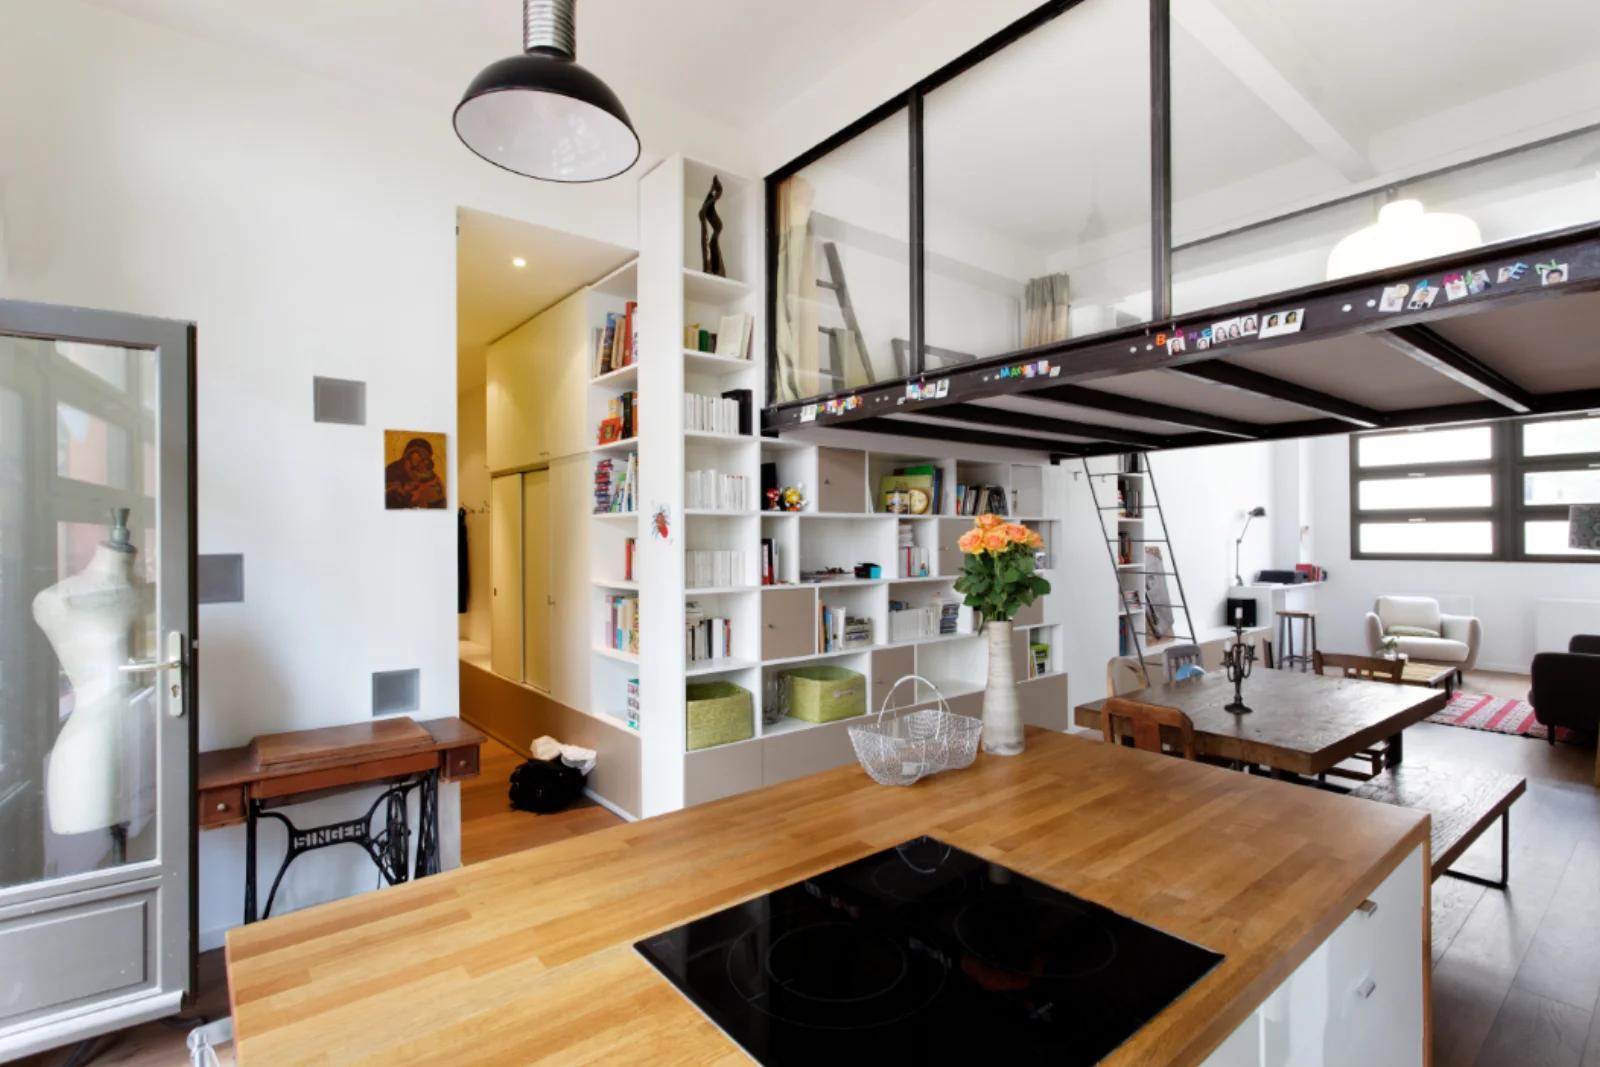 Kitchen in 6 bedrooms | terrace | architect's loft - 3